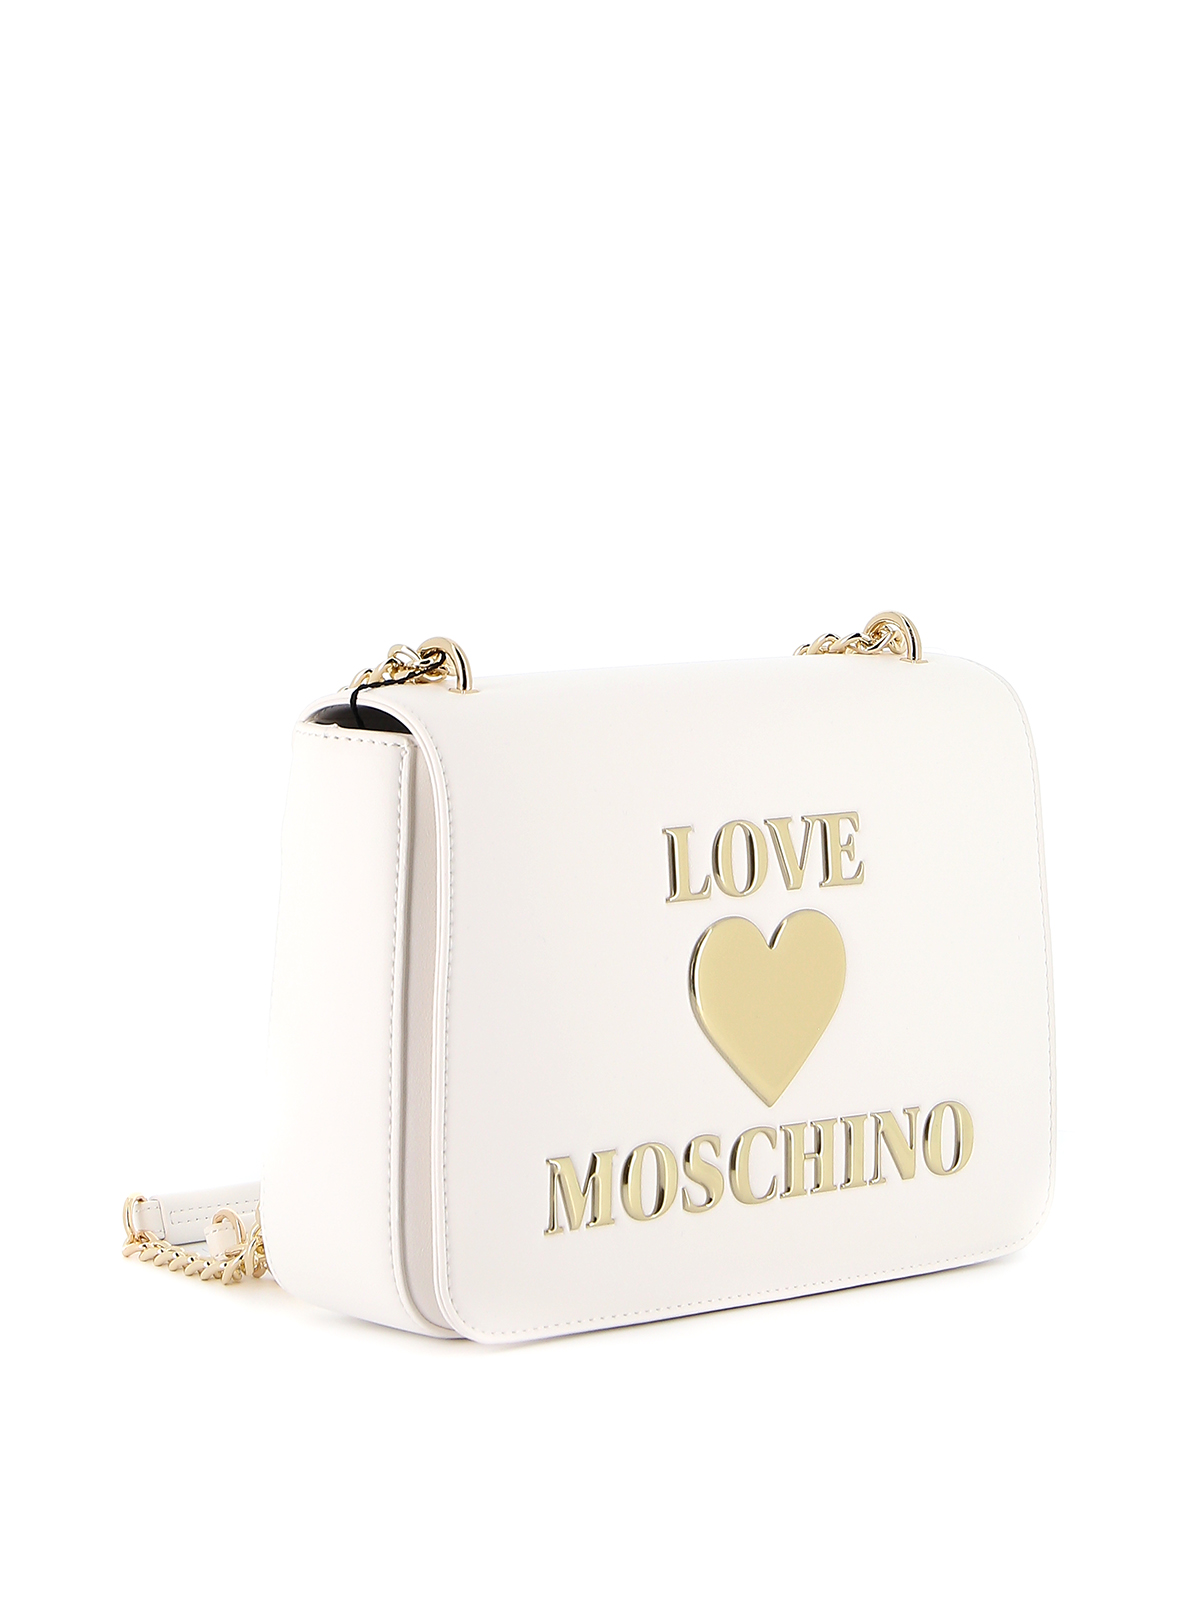 Love Moschino - Vegan leather shoulder 